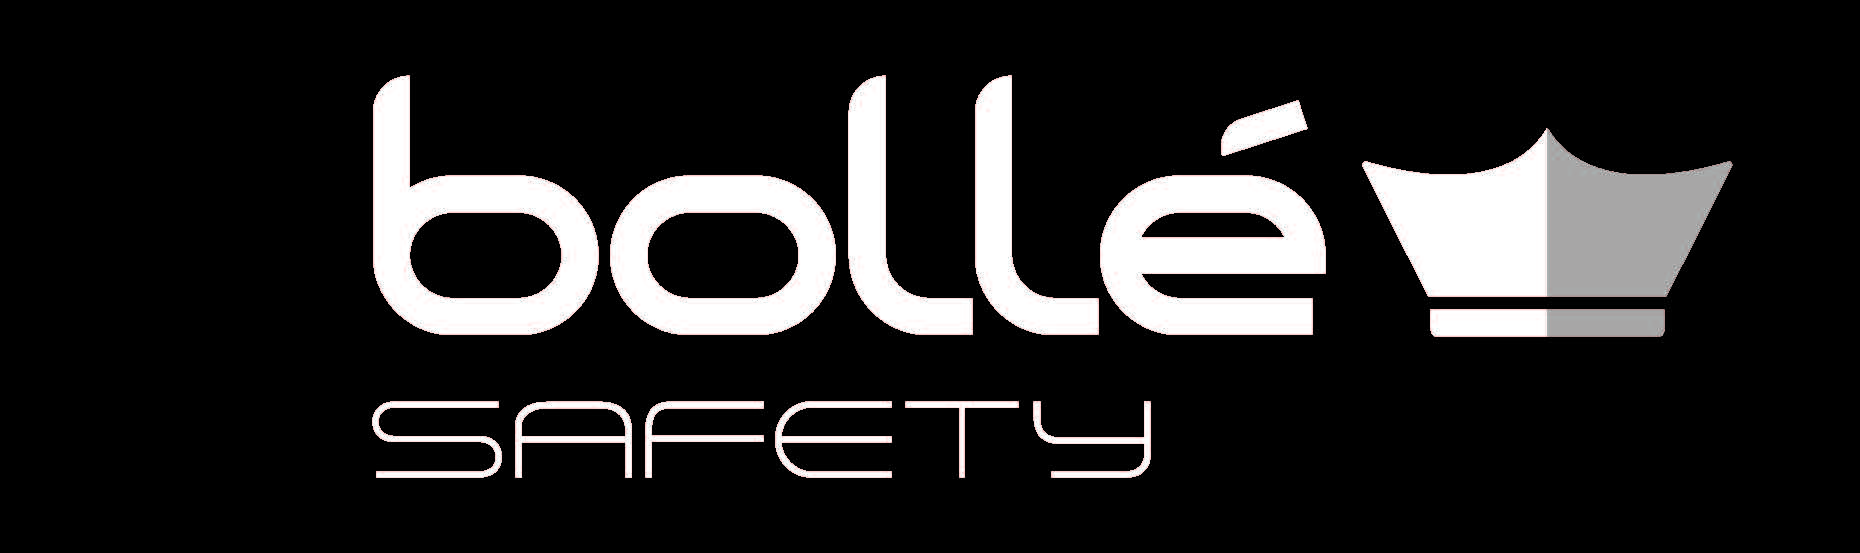 Bolle_Safety_Cartouche-Black-CMJN.jpg